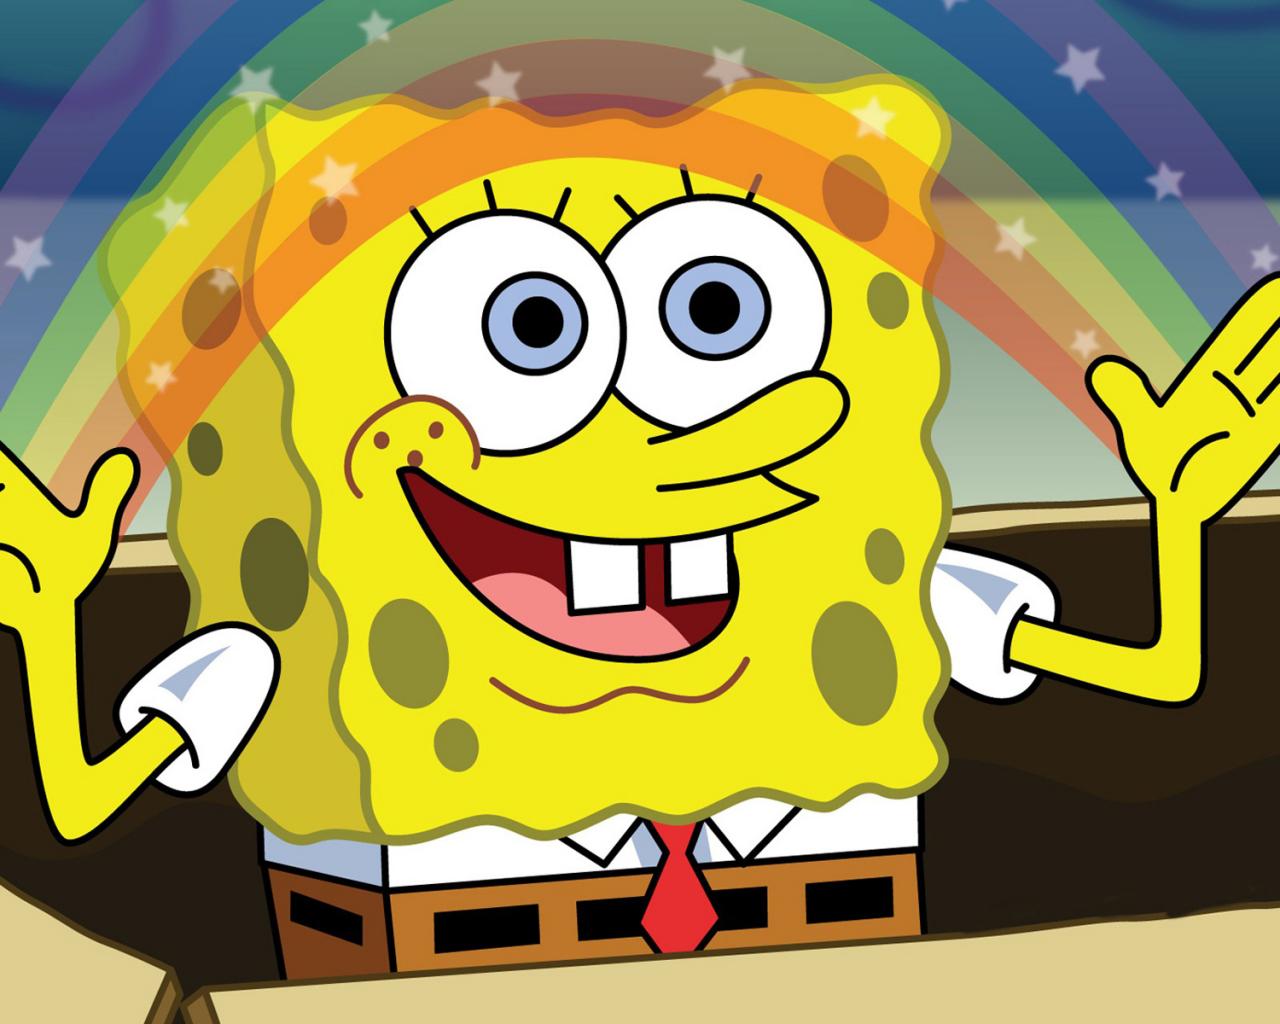 Spongebob-spongebob-squarepants-31312711